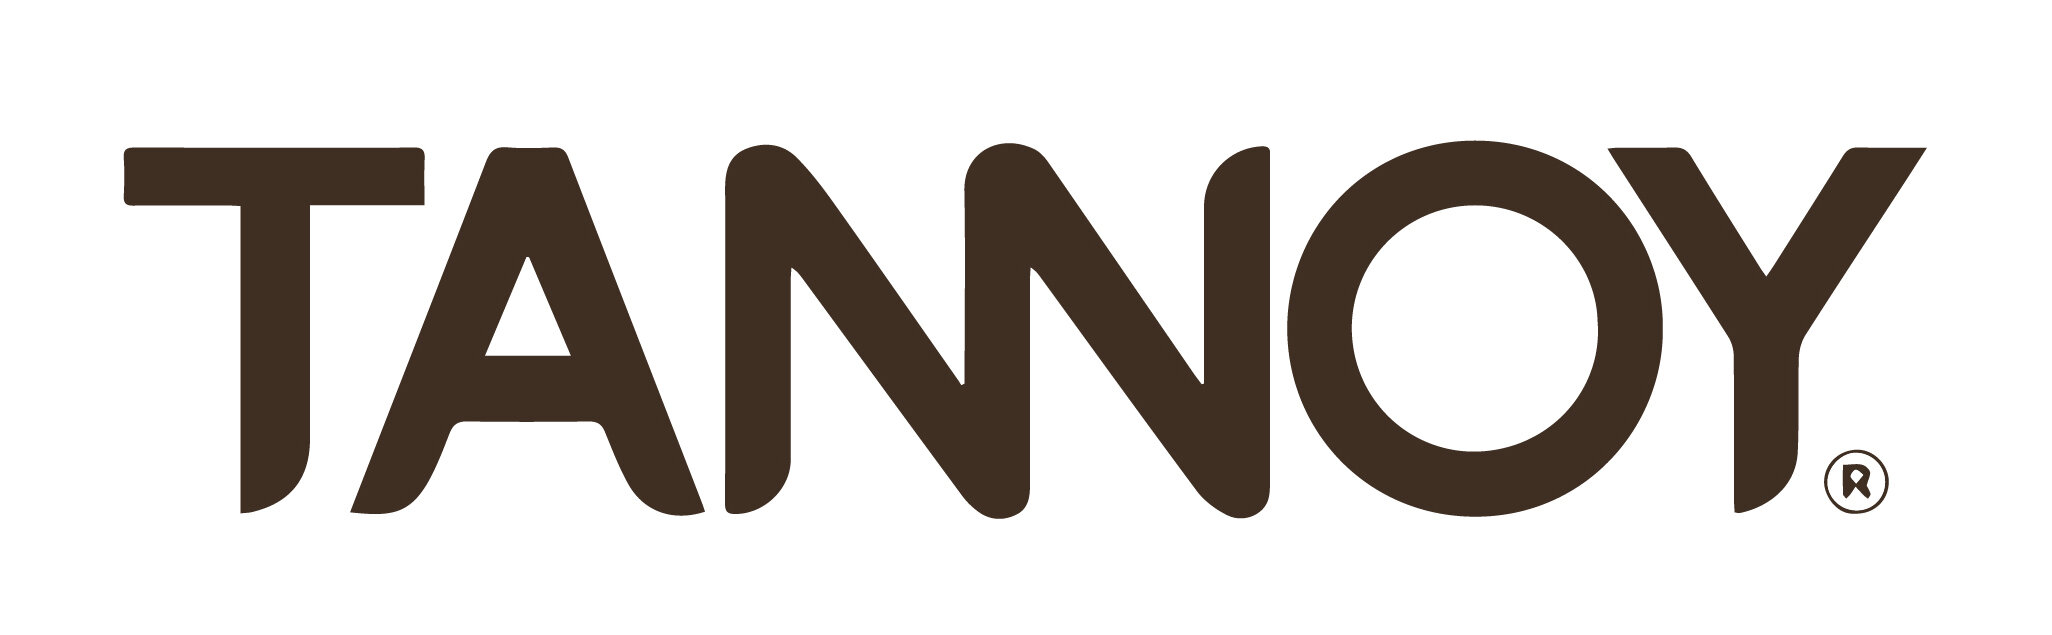 Tannoy brown logo.jpg